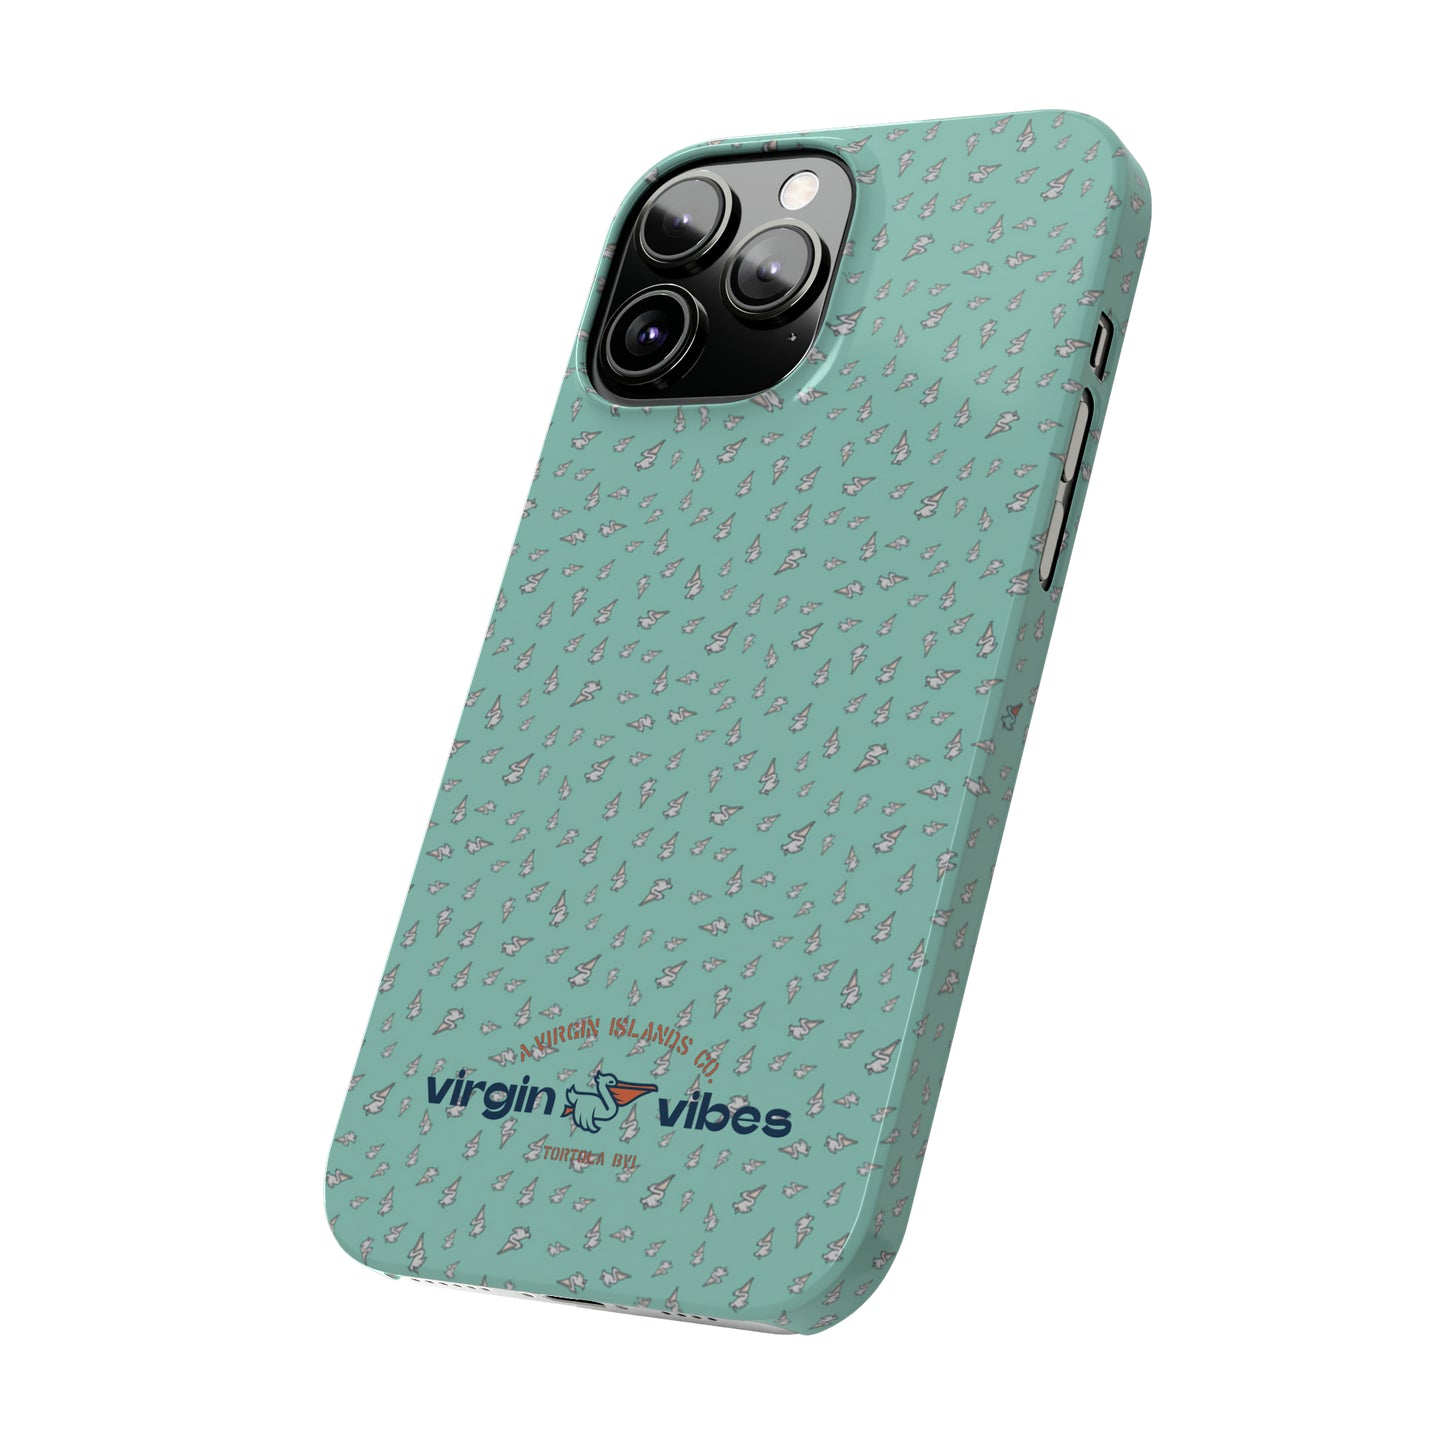 “Virgin Vibes | BVI” Slim iPhone Cases